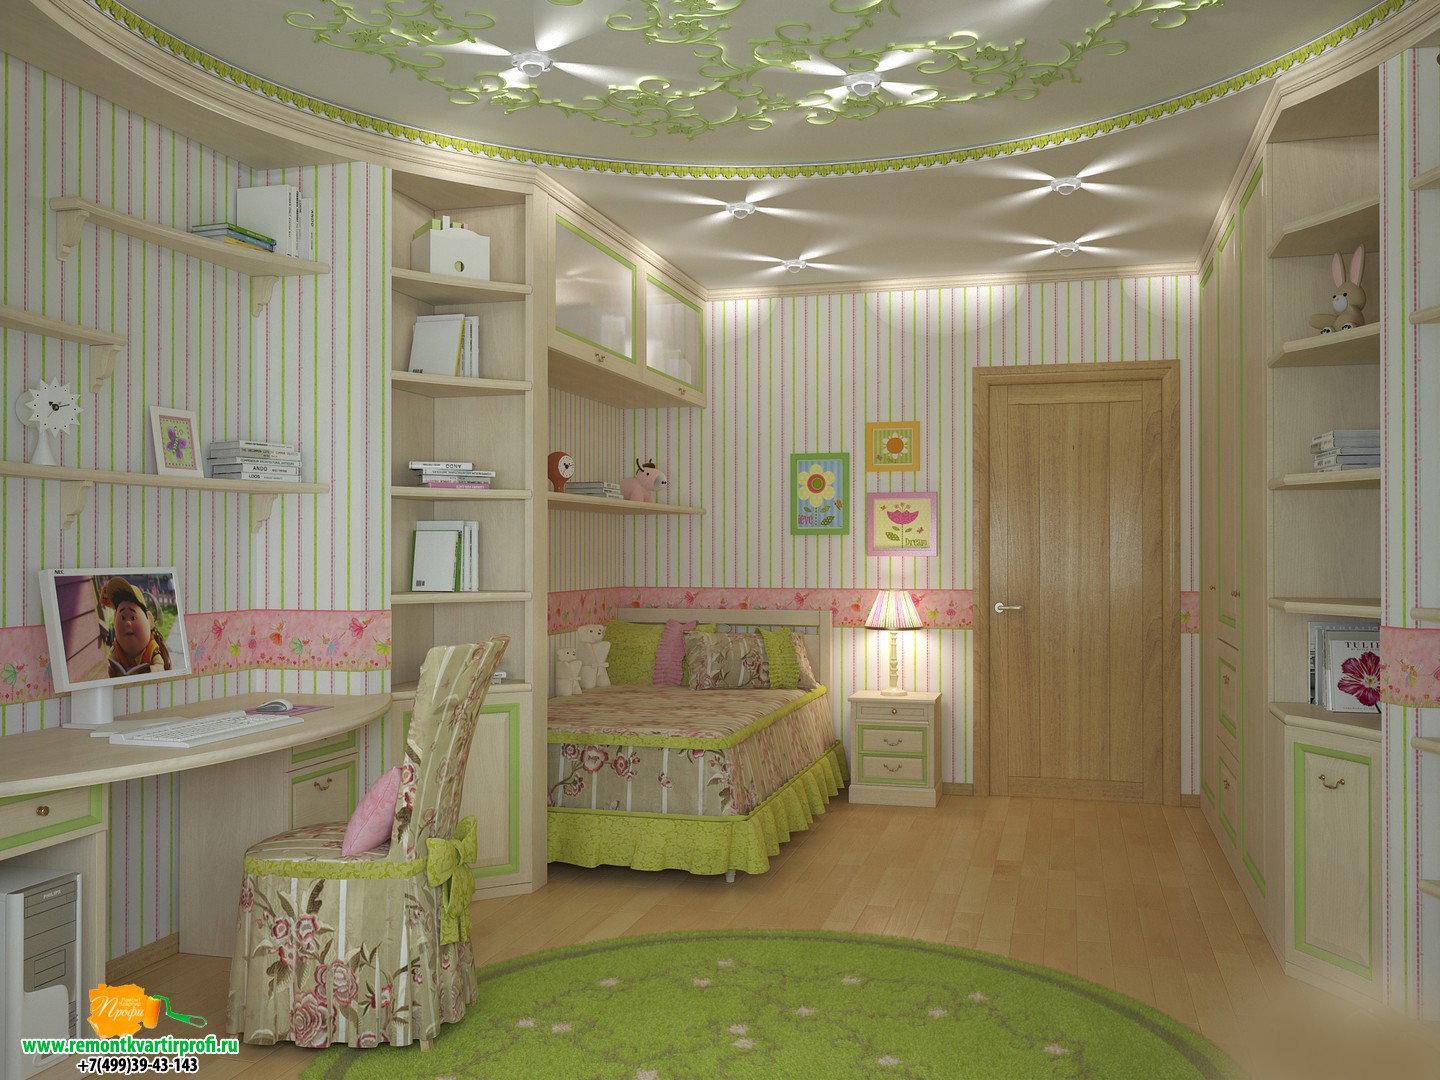 Bright design of a spacious children's room